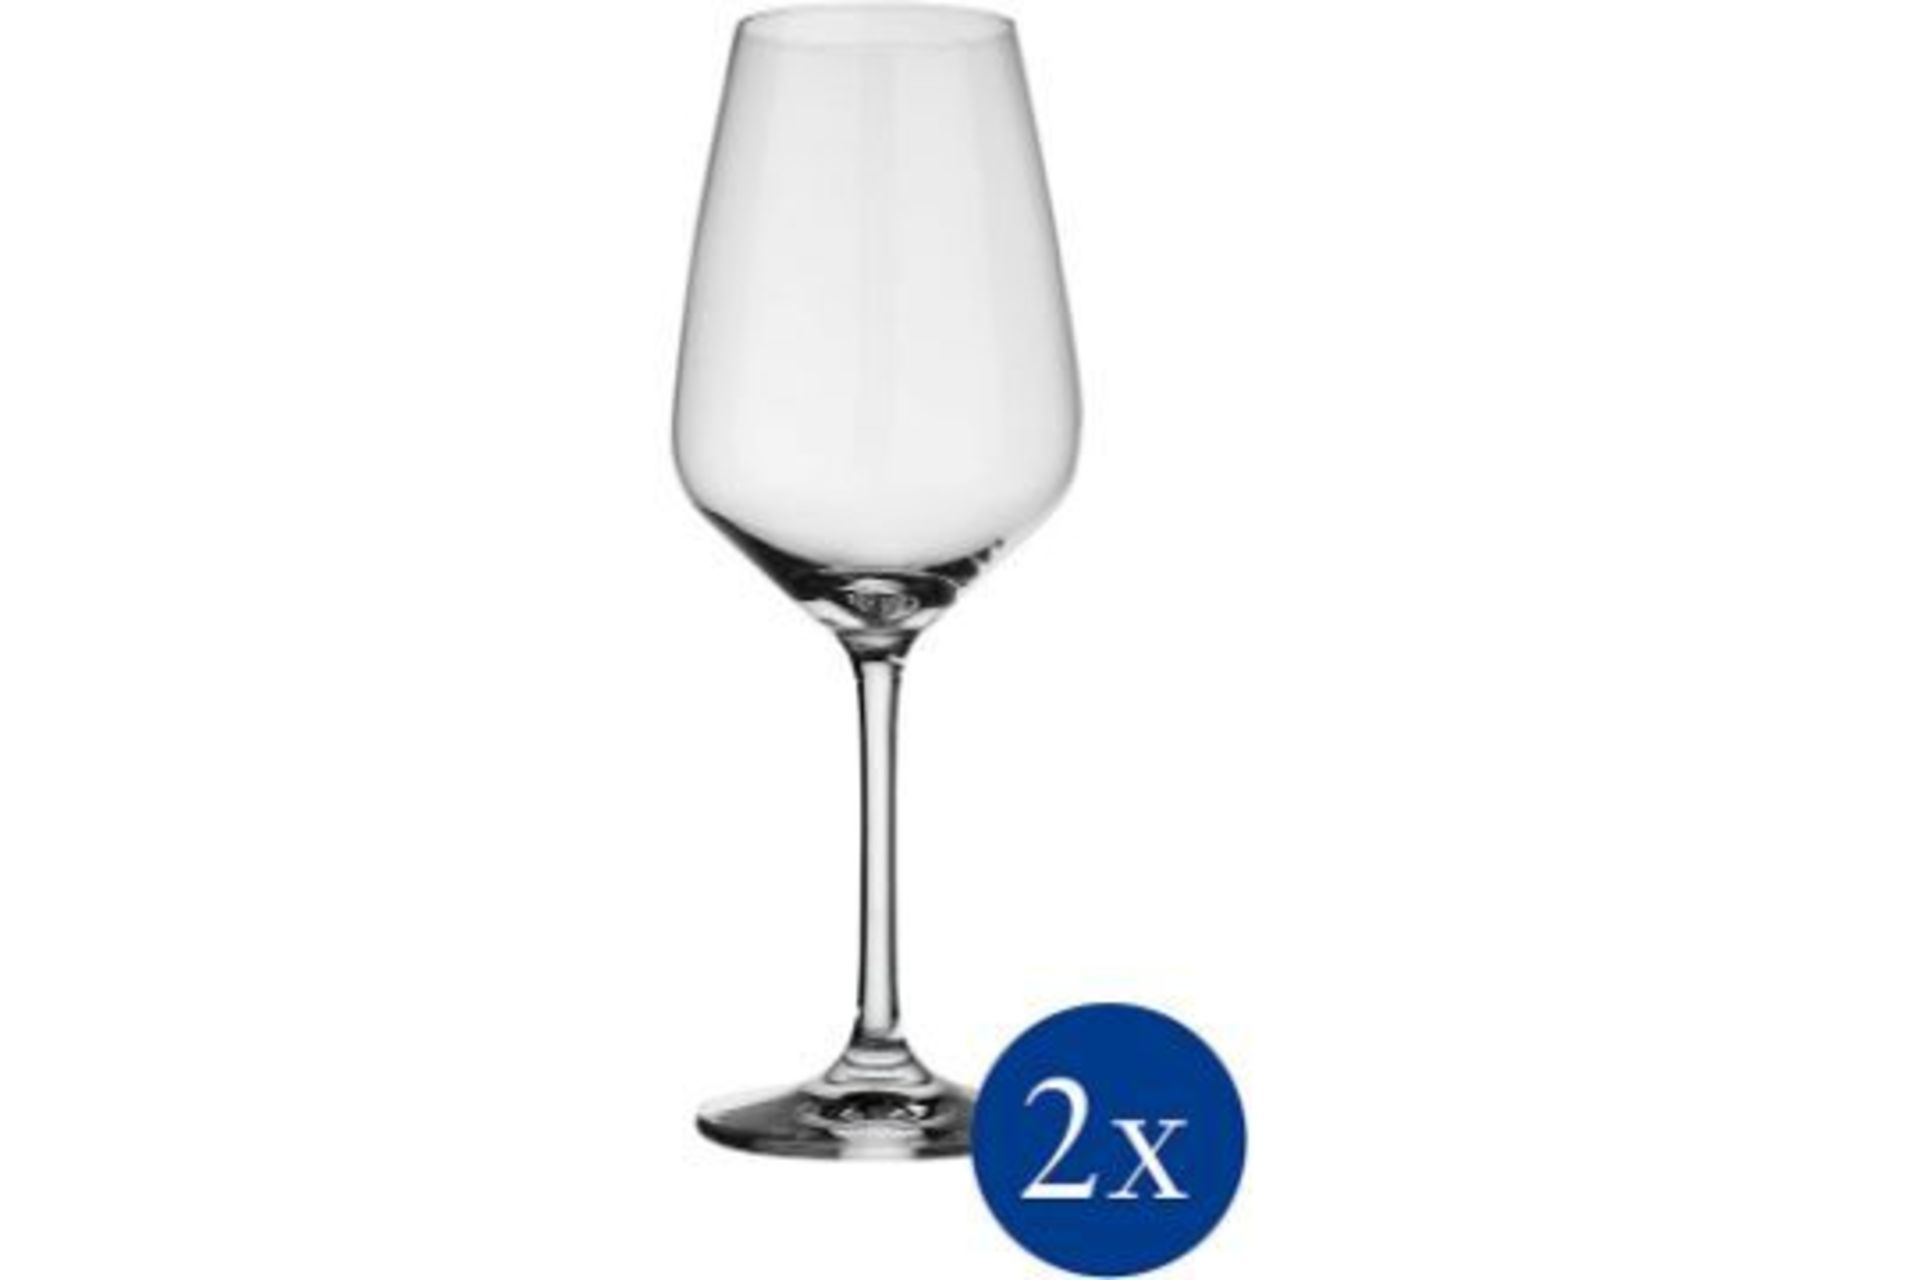 x2 New Vivo Villeroy & Bosch White Wine Glasses